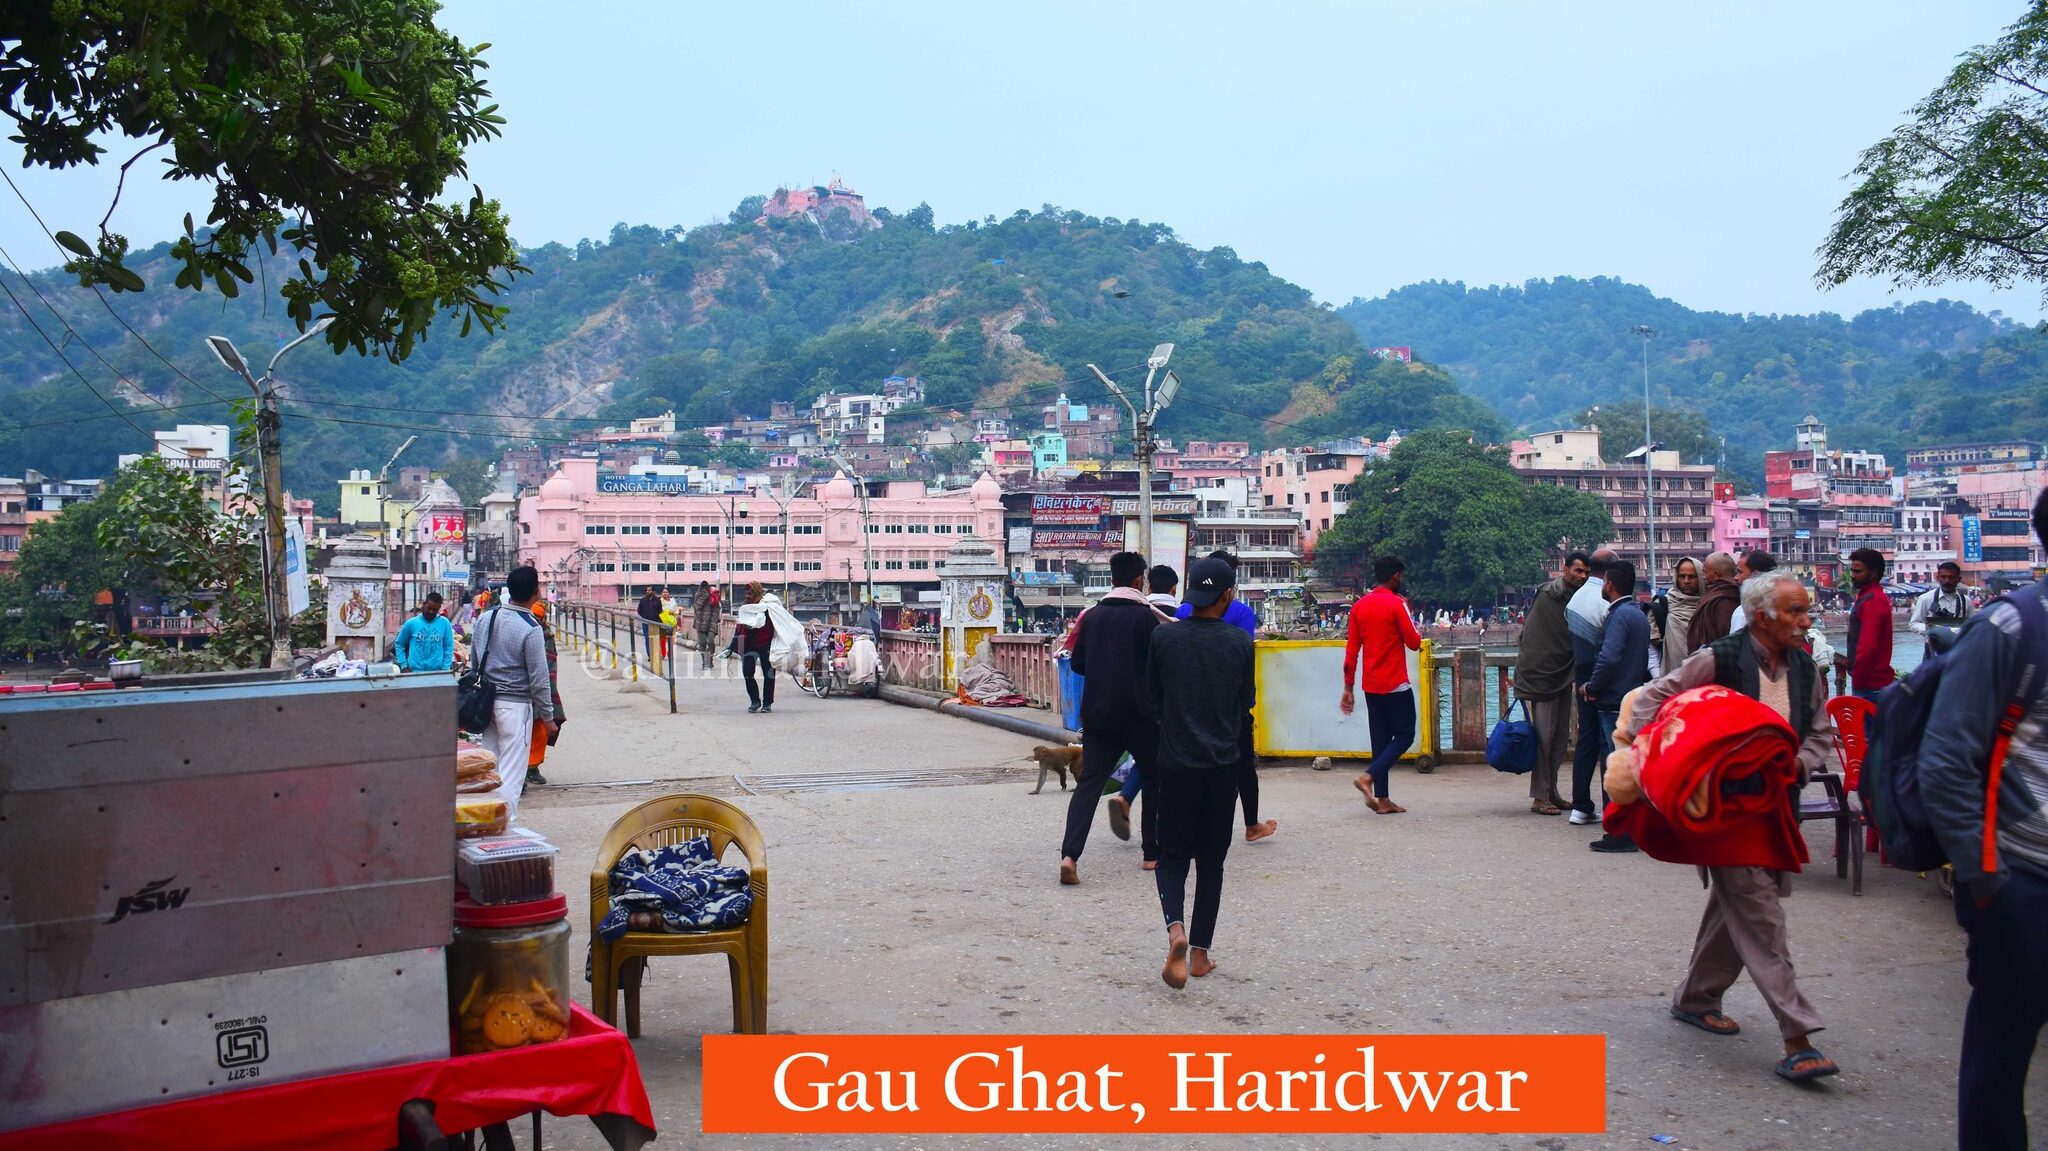 Gau Ghat is one of the most popular Ganga Ghats in Haridwar.